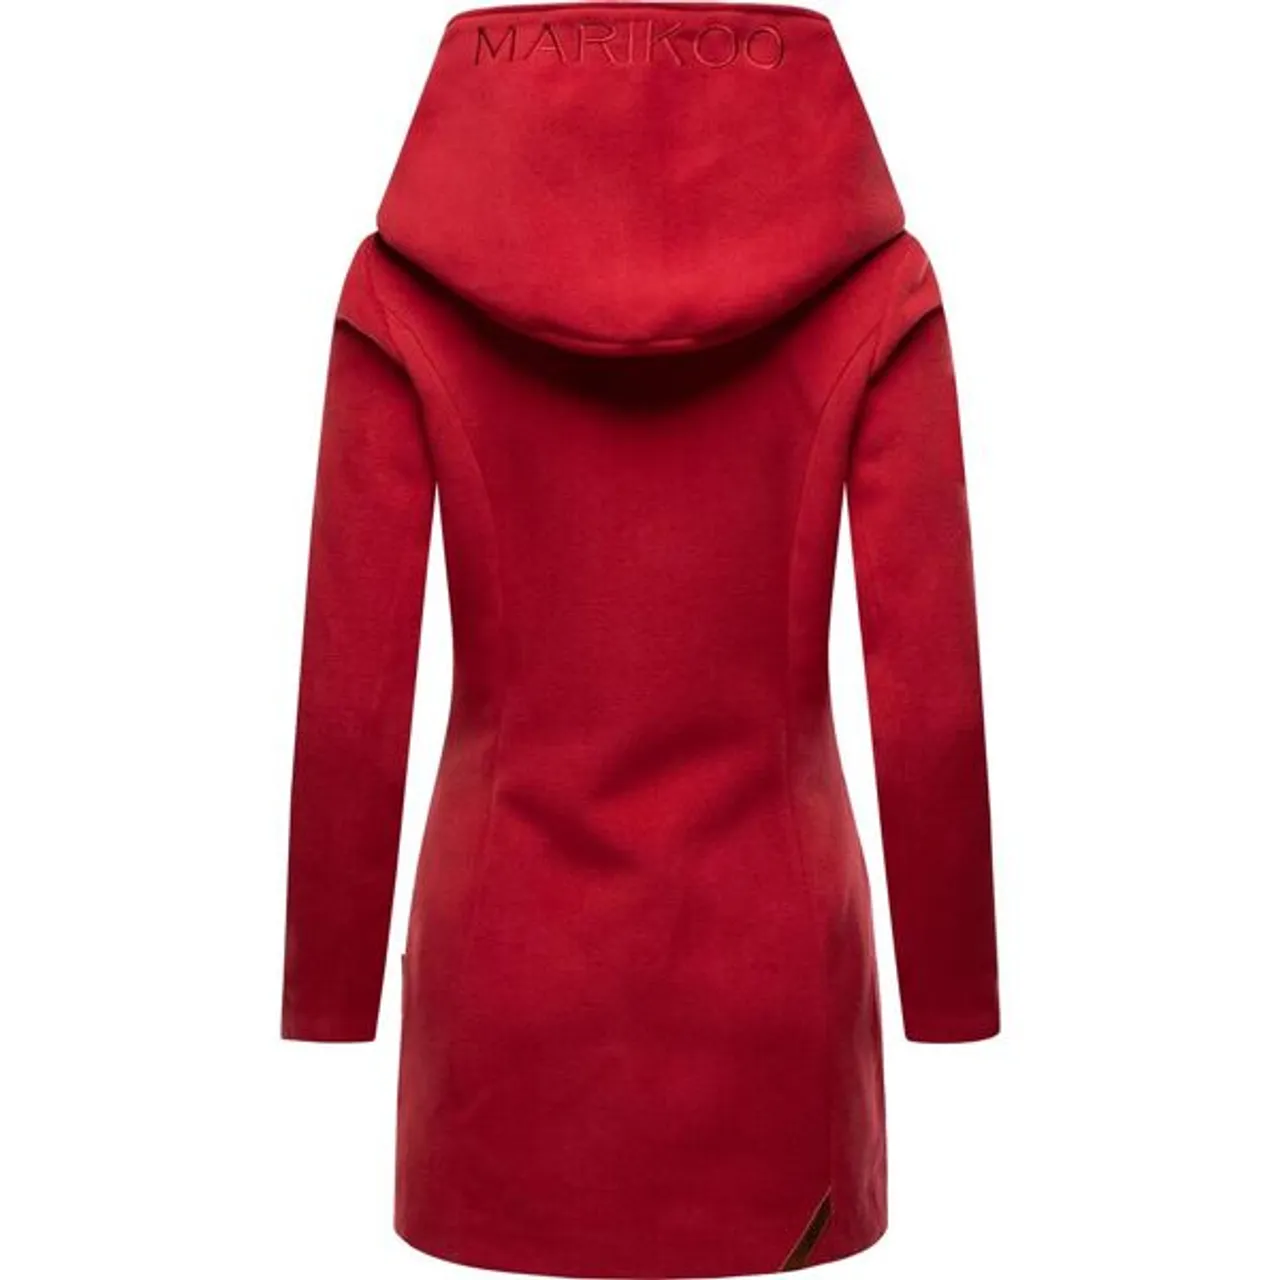 Wintermantel MARIKOO "Maikoo" Gr. S (36), rot (dunkelrot) Damen Mäntel Wintermäntel hochwertiger Mantel mit großer Kapuze